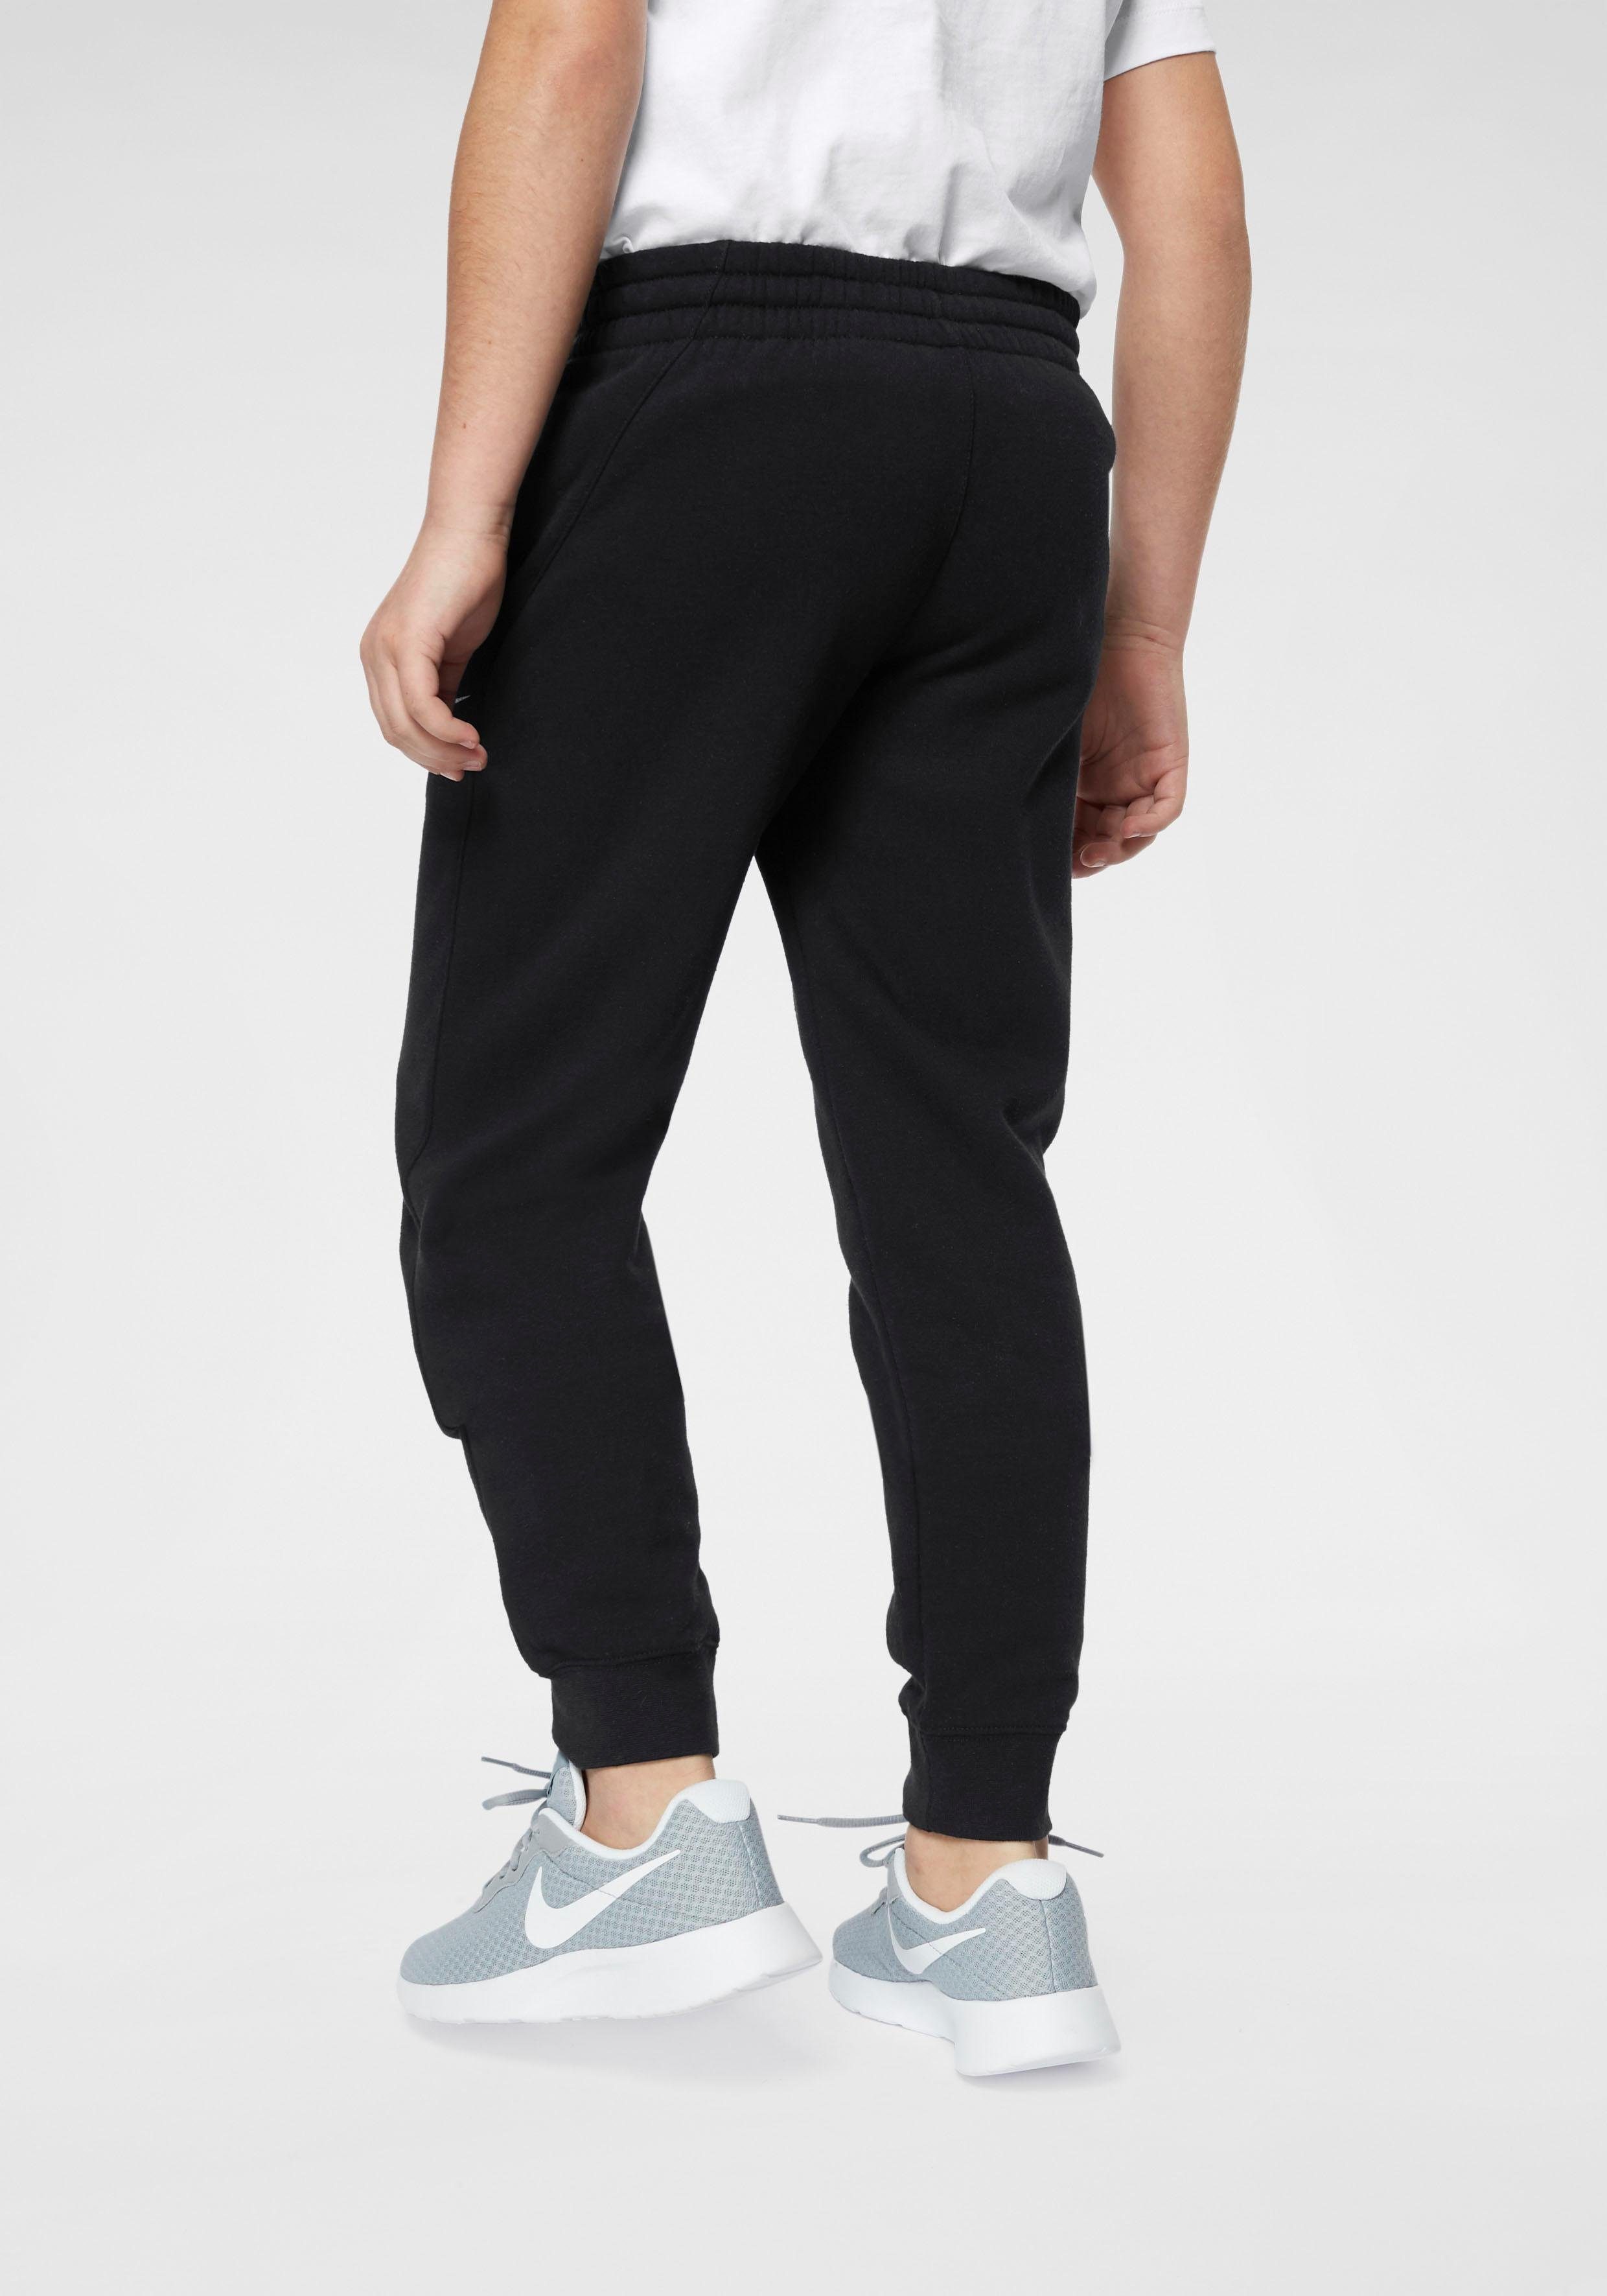 Sportswear PANT Nike FLEECE JOGGER schwarz CLUB Jogginghose B NSW